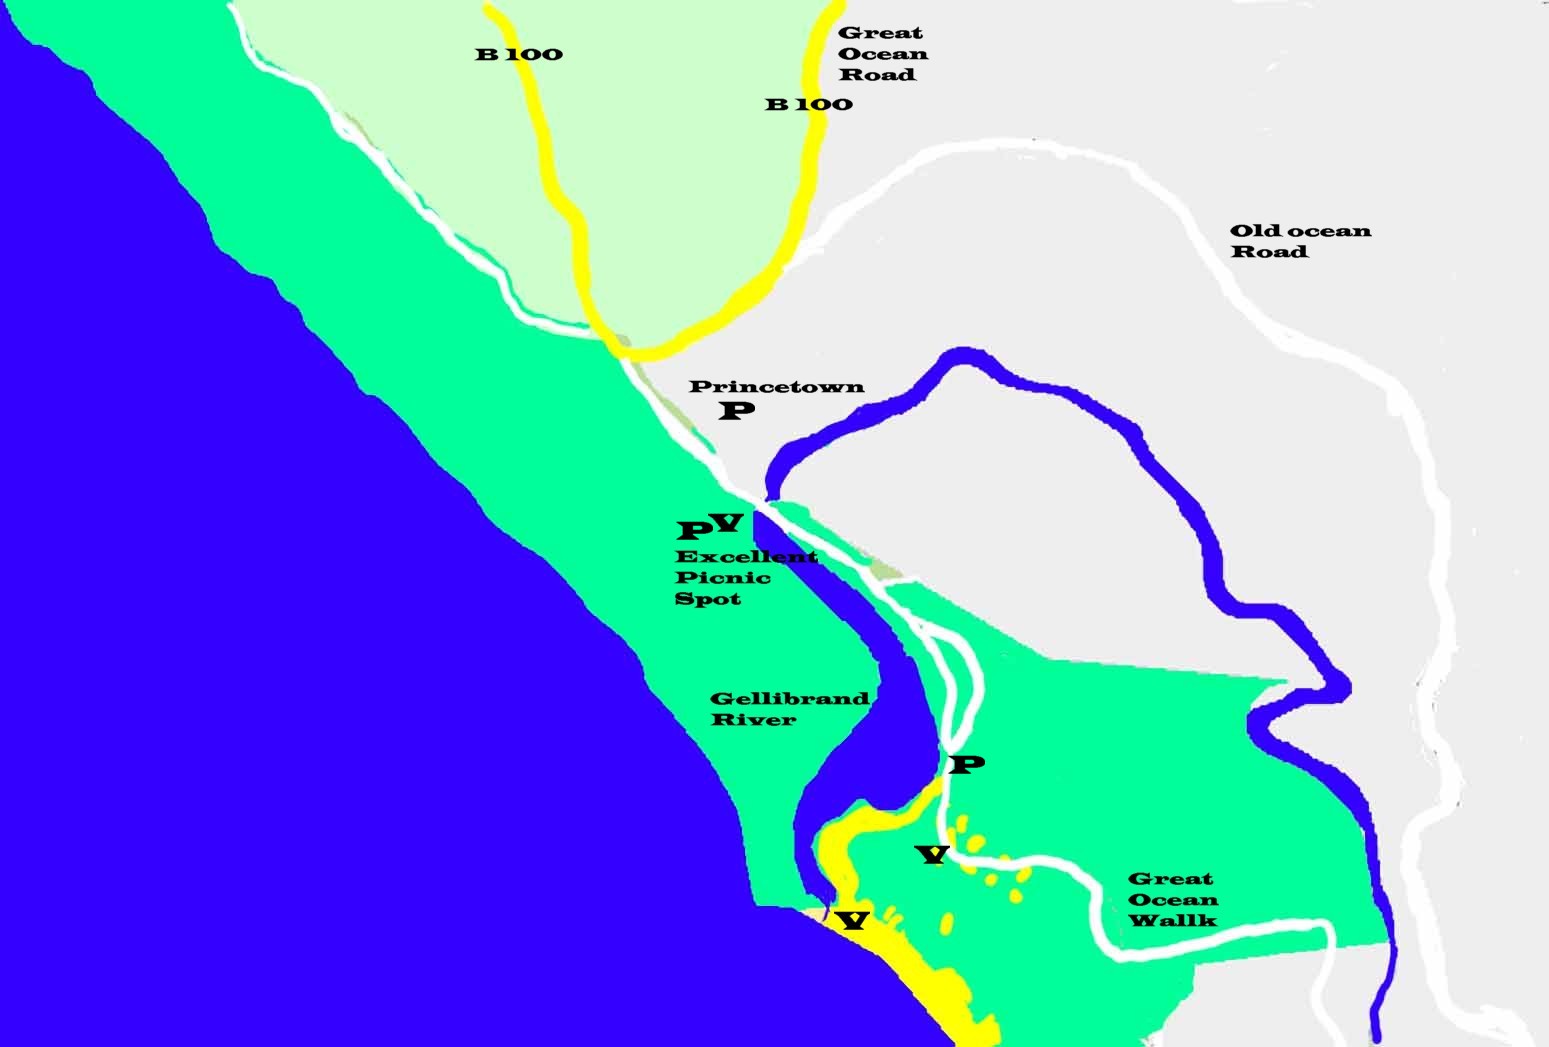 Great Ocean Road Map
                Princetown